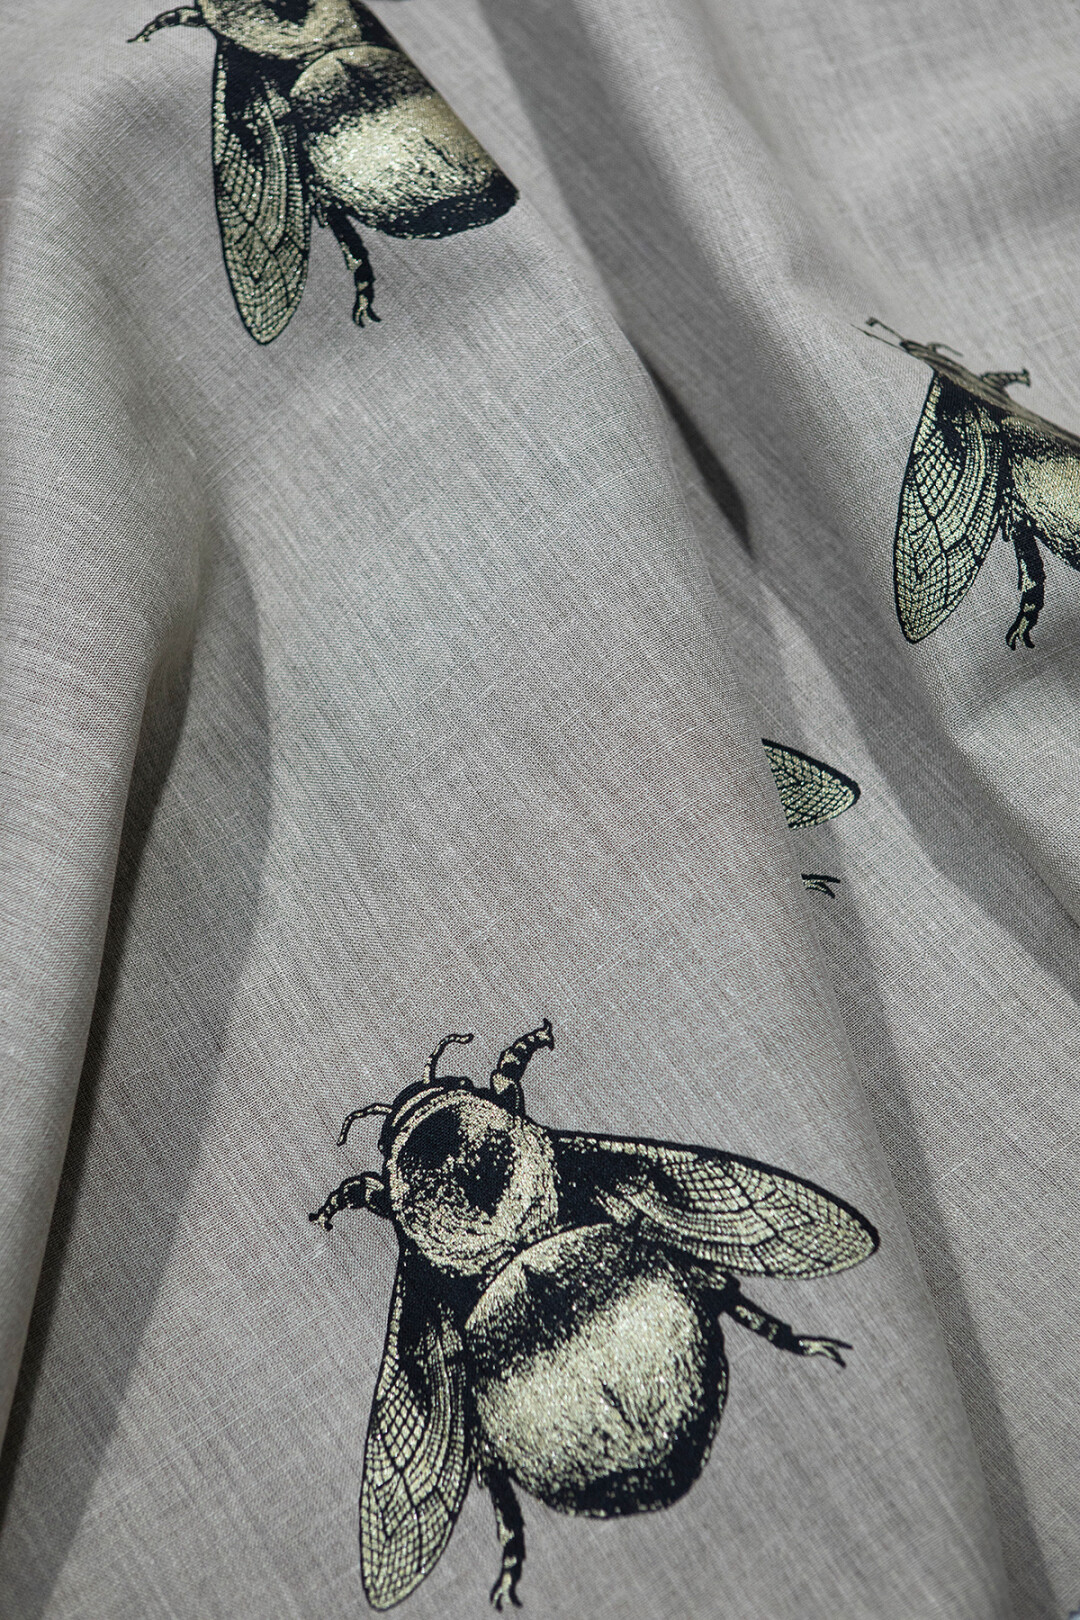 Napoleon Bee Fabric  Embroidered Bee Fabric